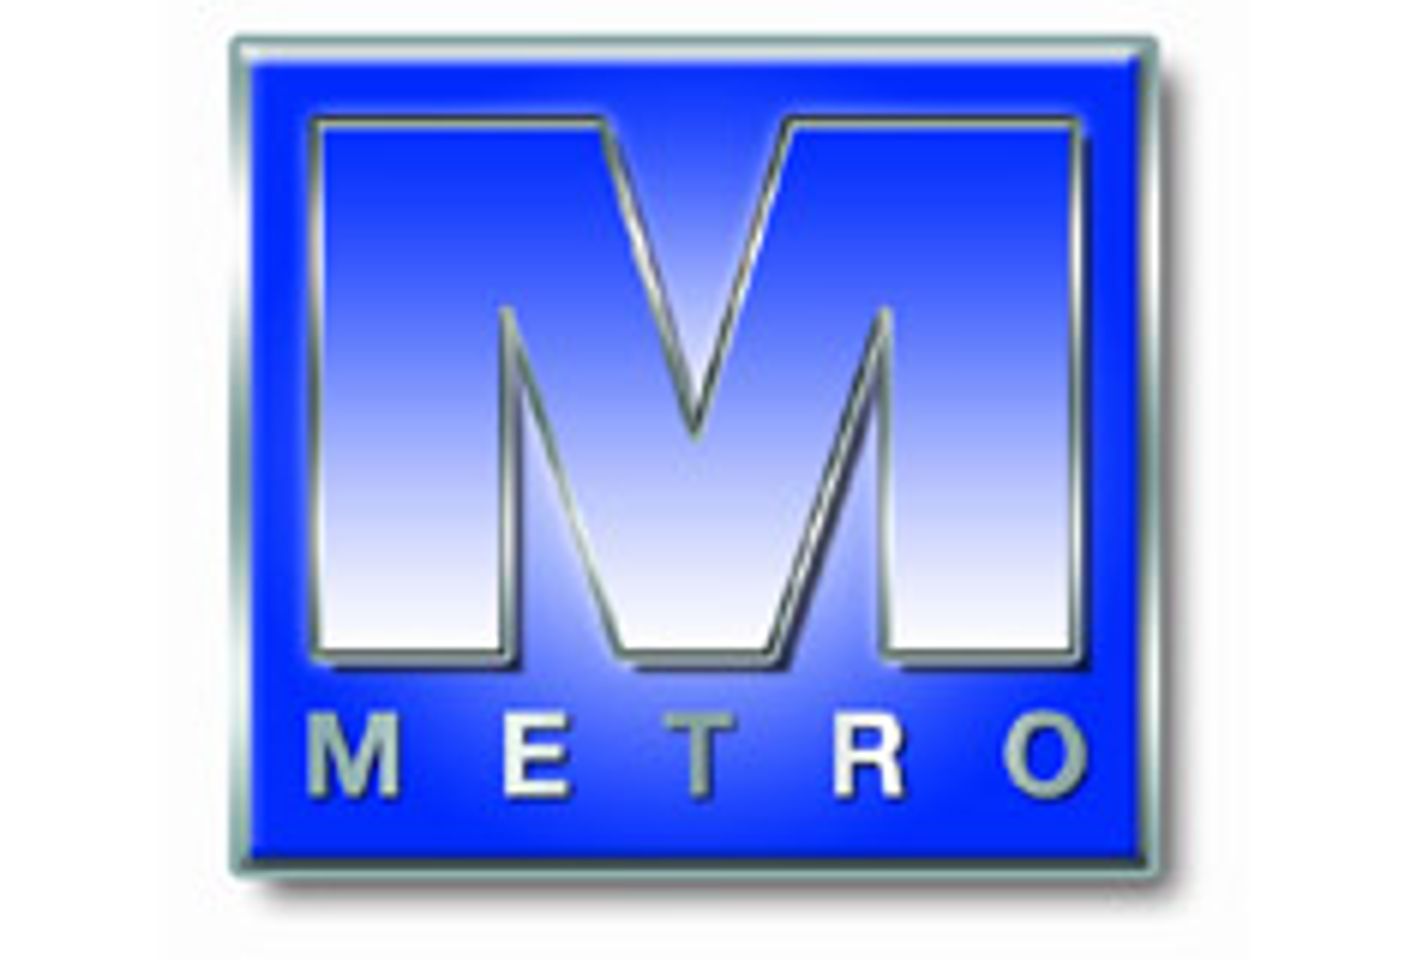 Metro Interactive Plans Relocation